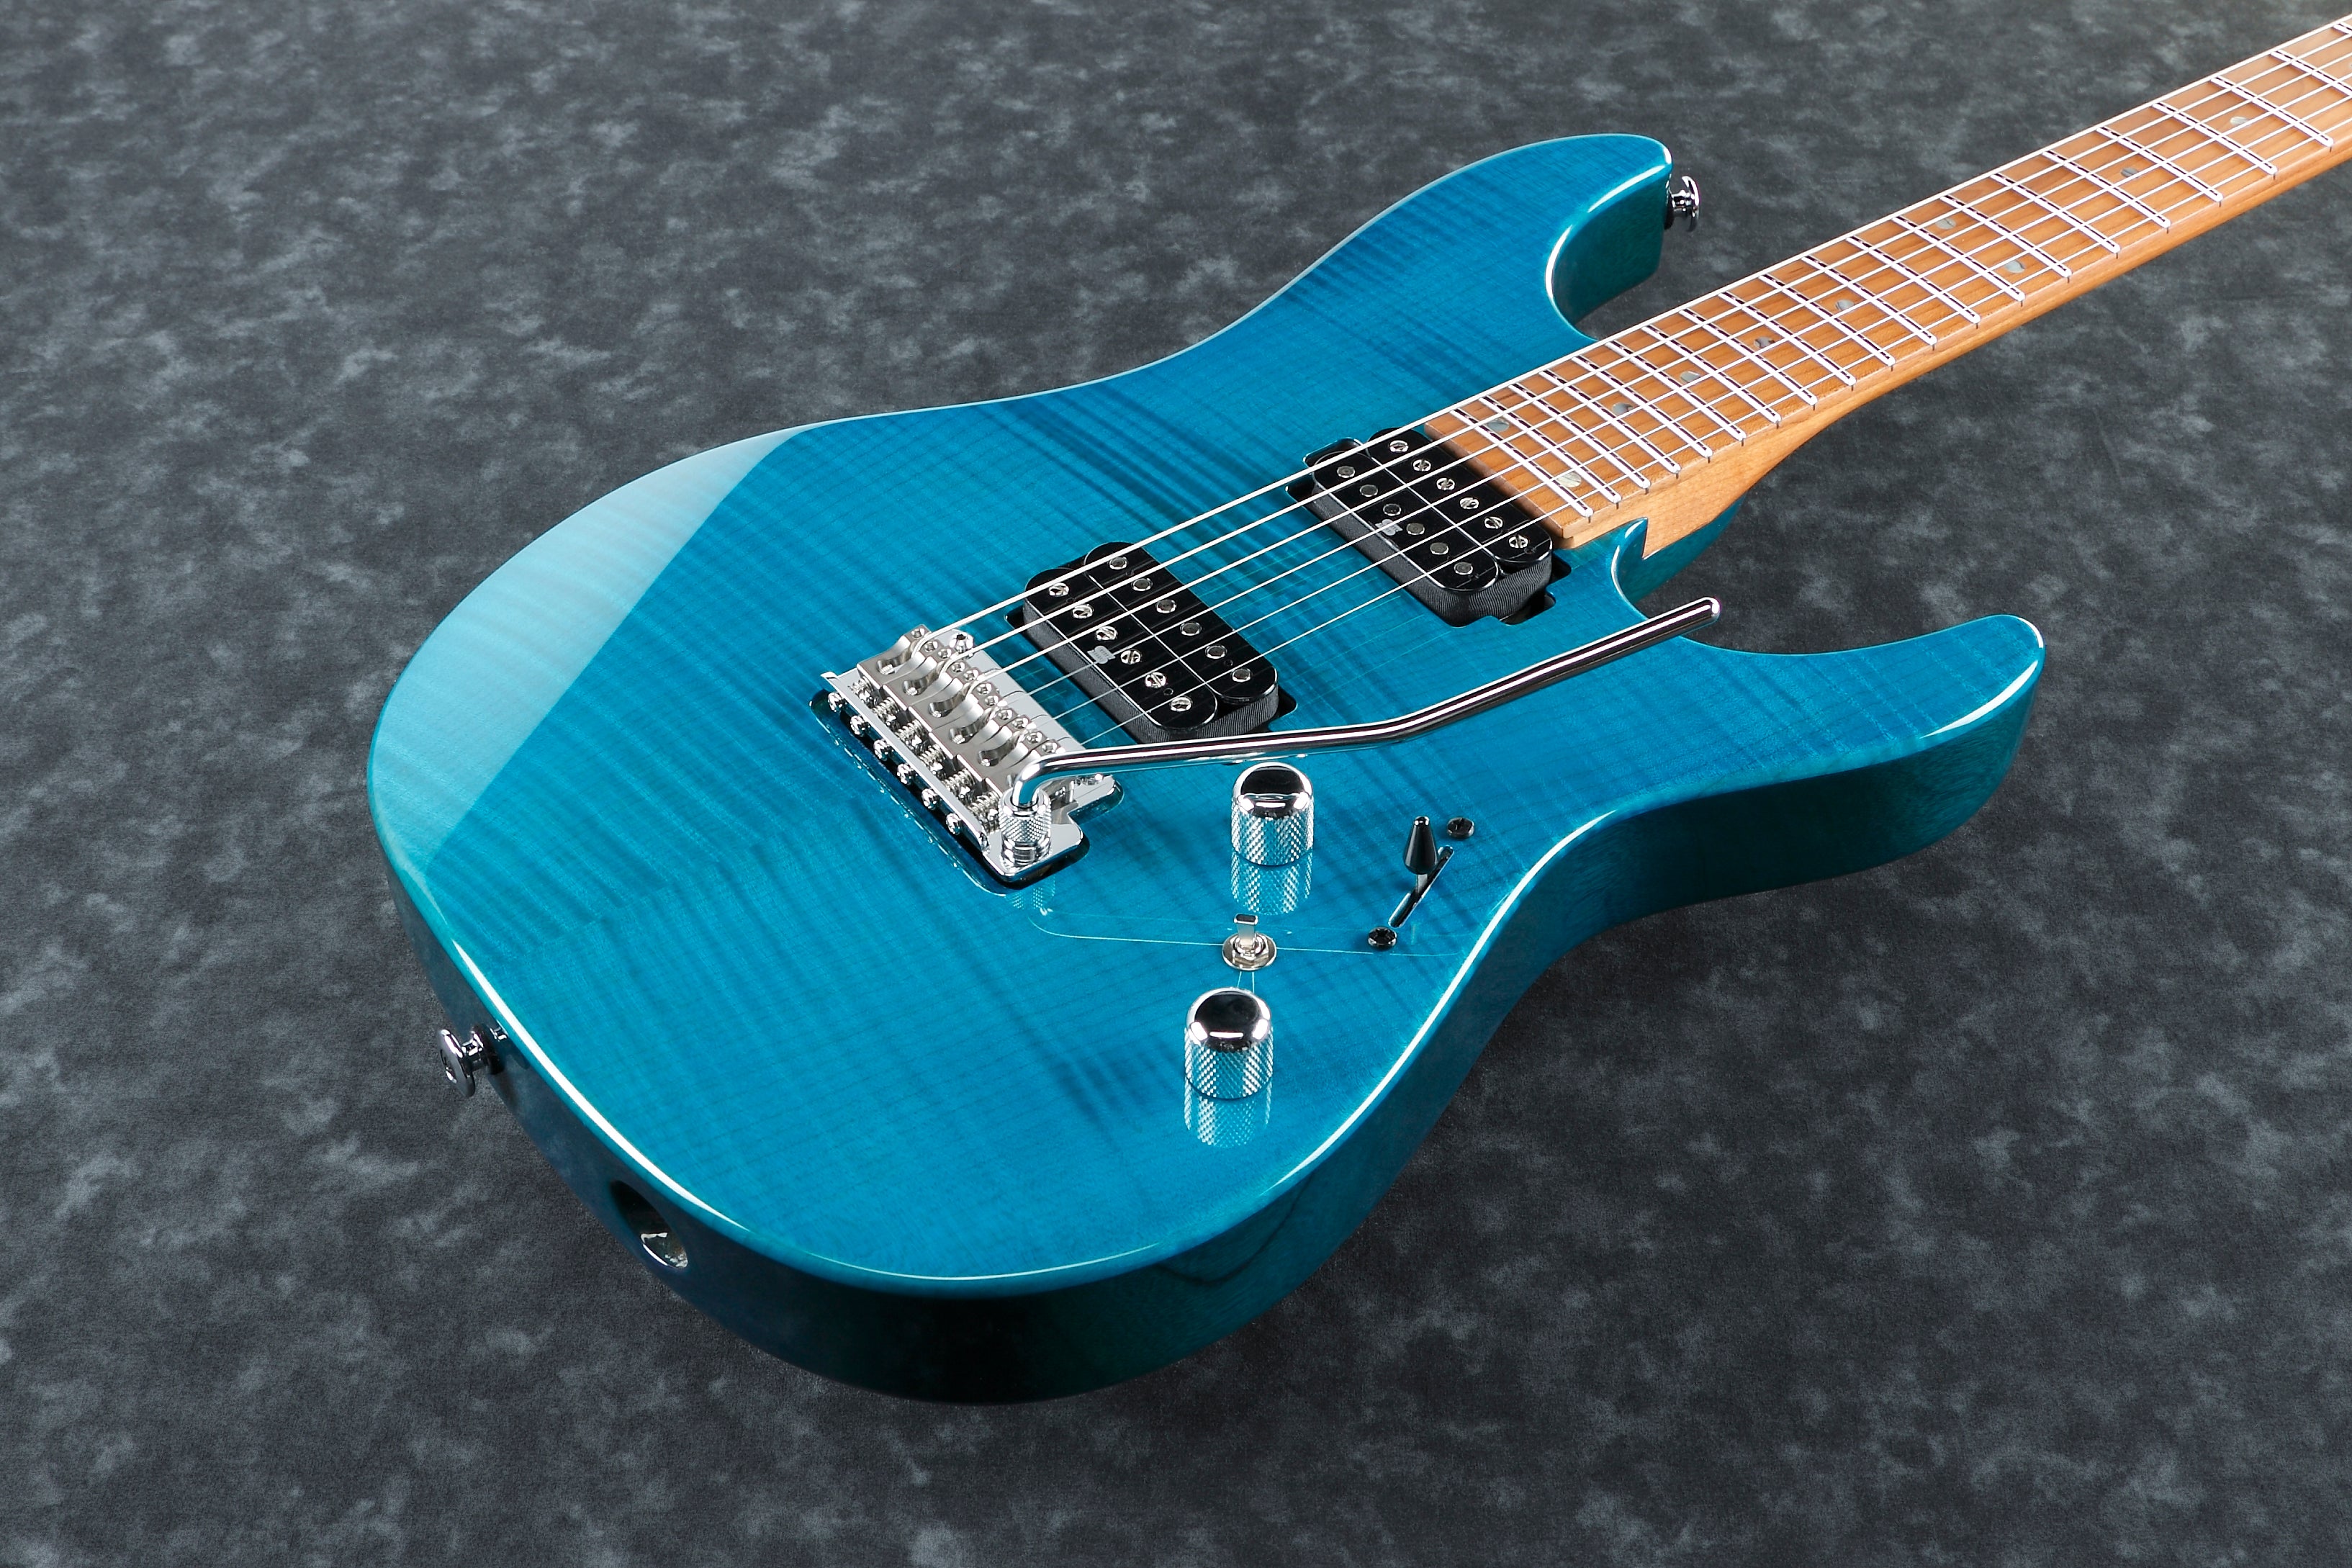 Ibanez MM1-TAB Martin Miller Signature (Transparent Aqua Blue) Japan made Electric Guitar 電結他